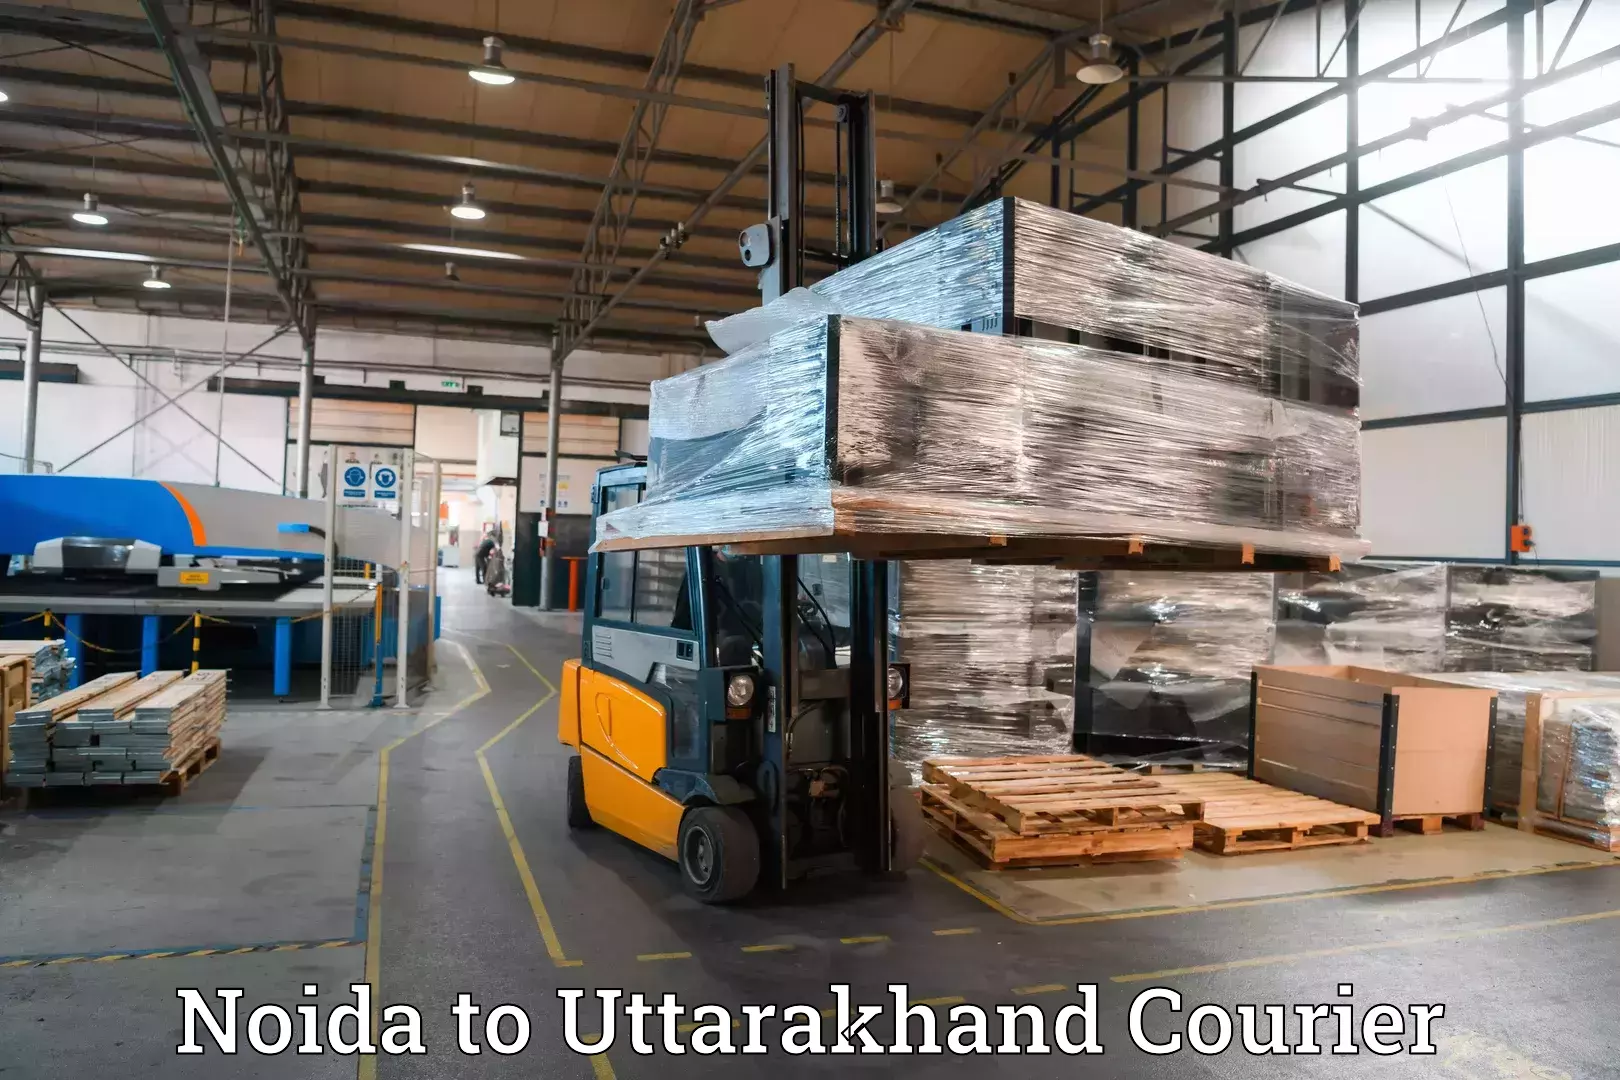 Luggage transport company Noida to IIT Roorkee